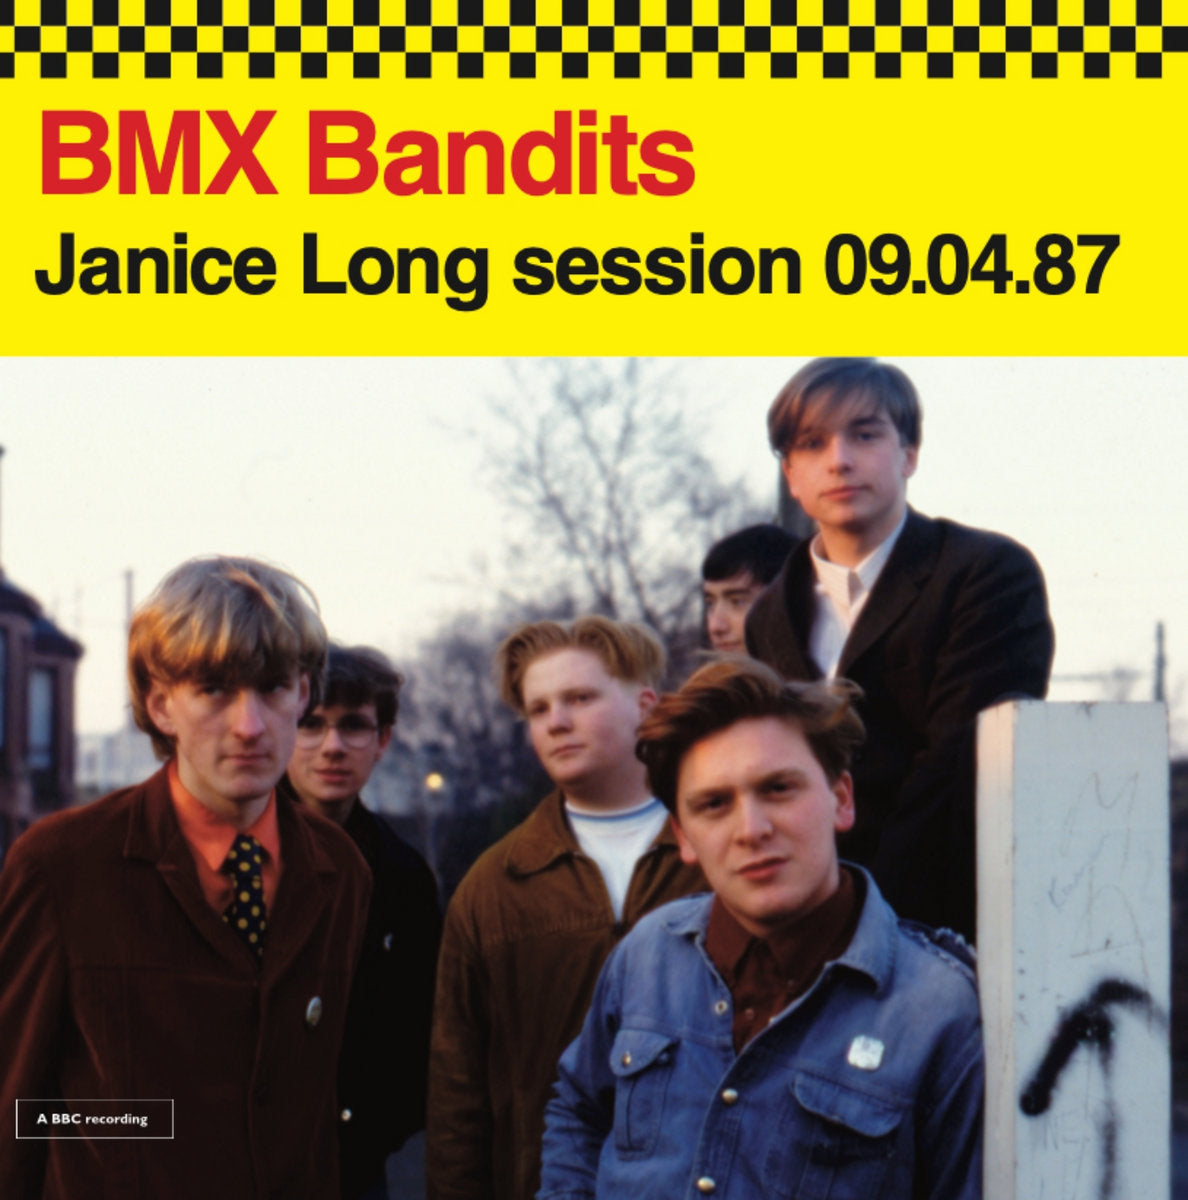 BMX Bandits – Janice Long session 09.04.87 (Precious) 2 x 7"